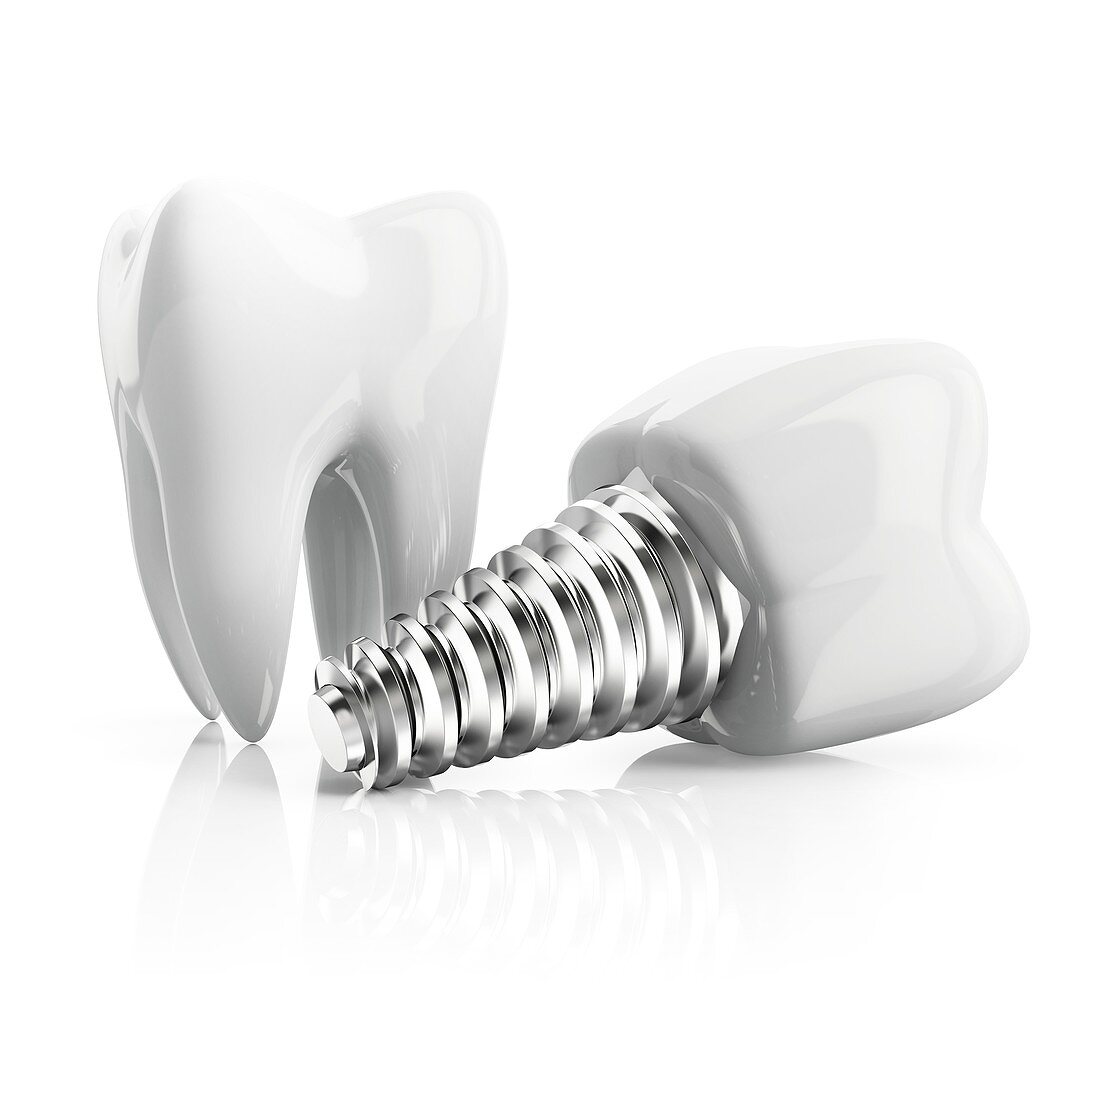 Tooth implant, illustration